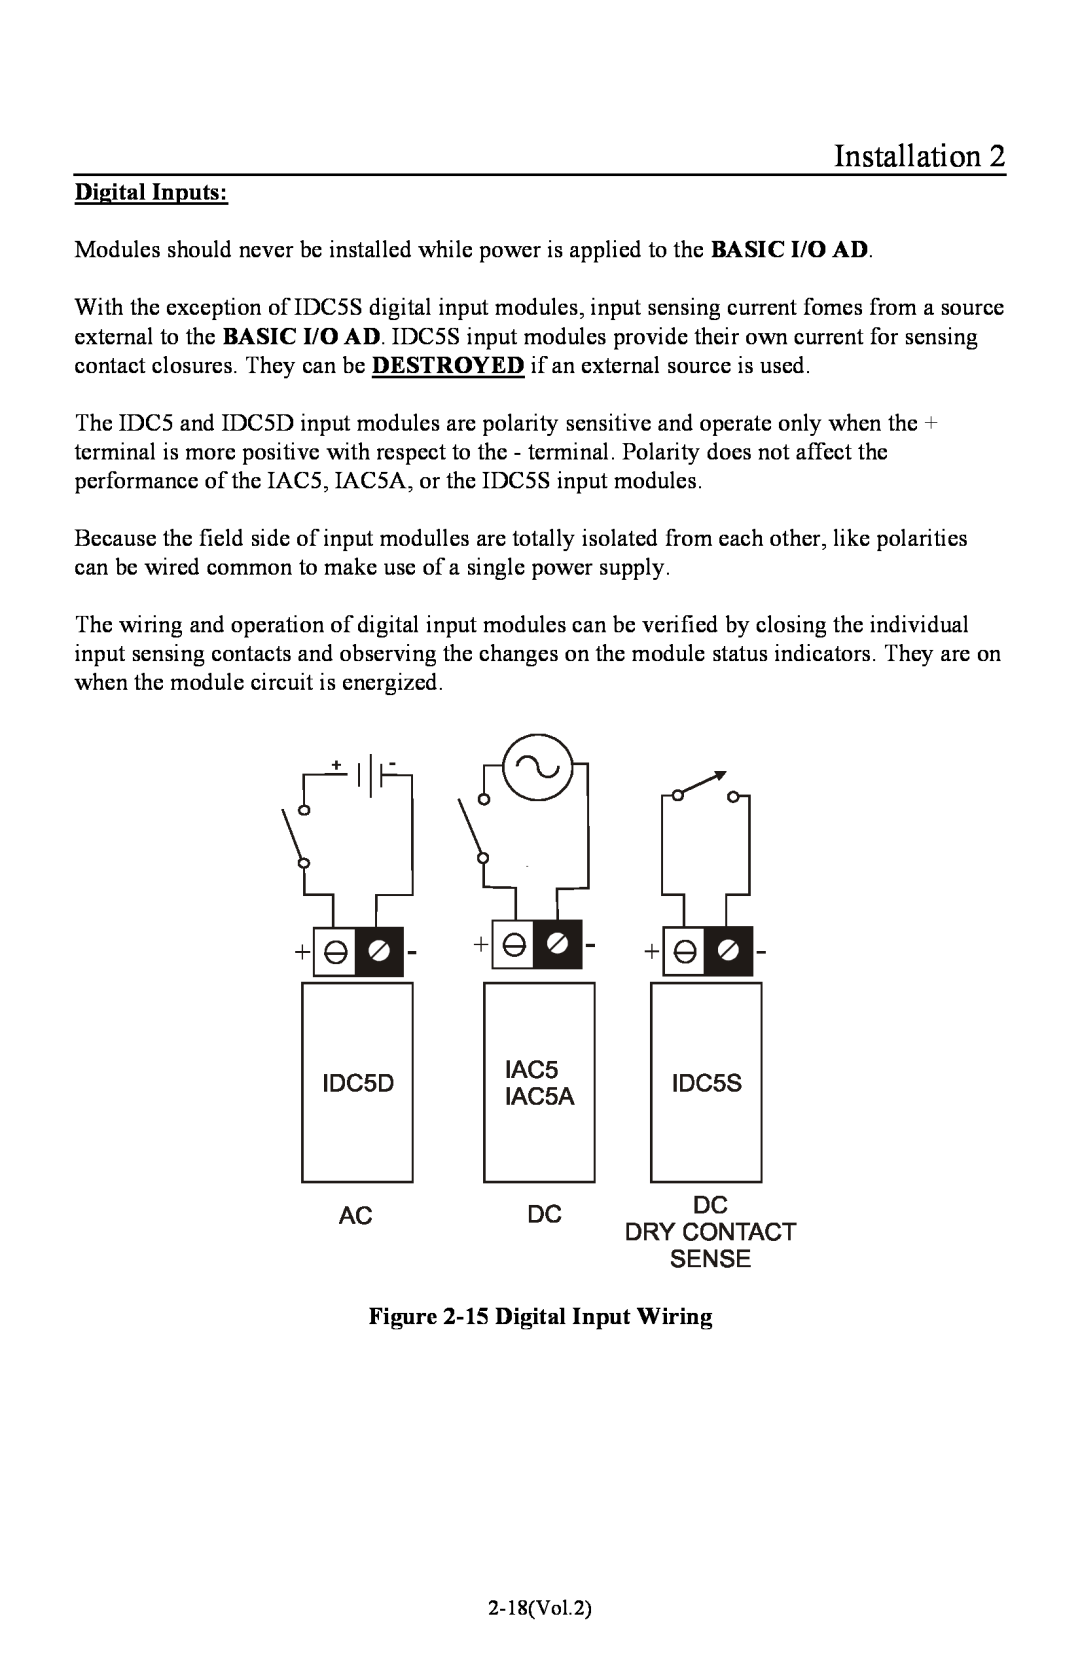 I-O Display Systems Basic I/O Product manual Installation, Digital Inputs, 15 Digital Input Wiring, 2-18Vol.2 